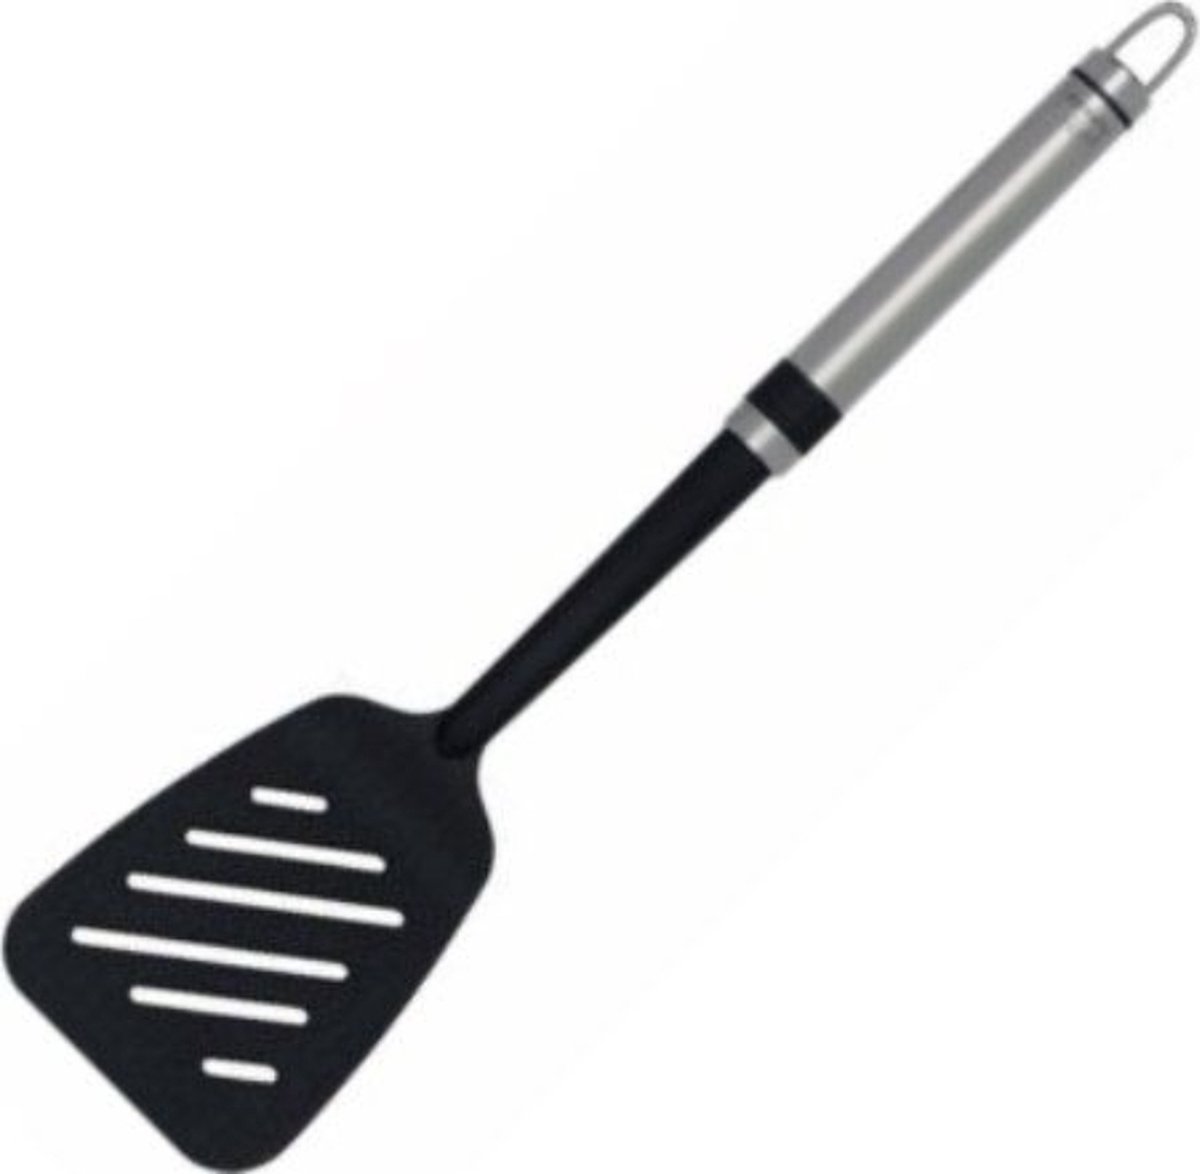 Brabantia Profile spatule anti-adhérents - RVS